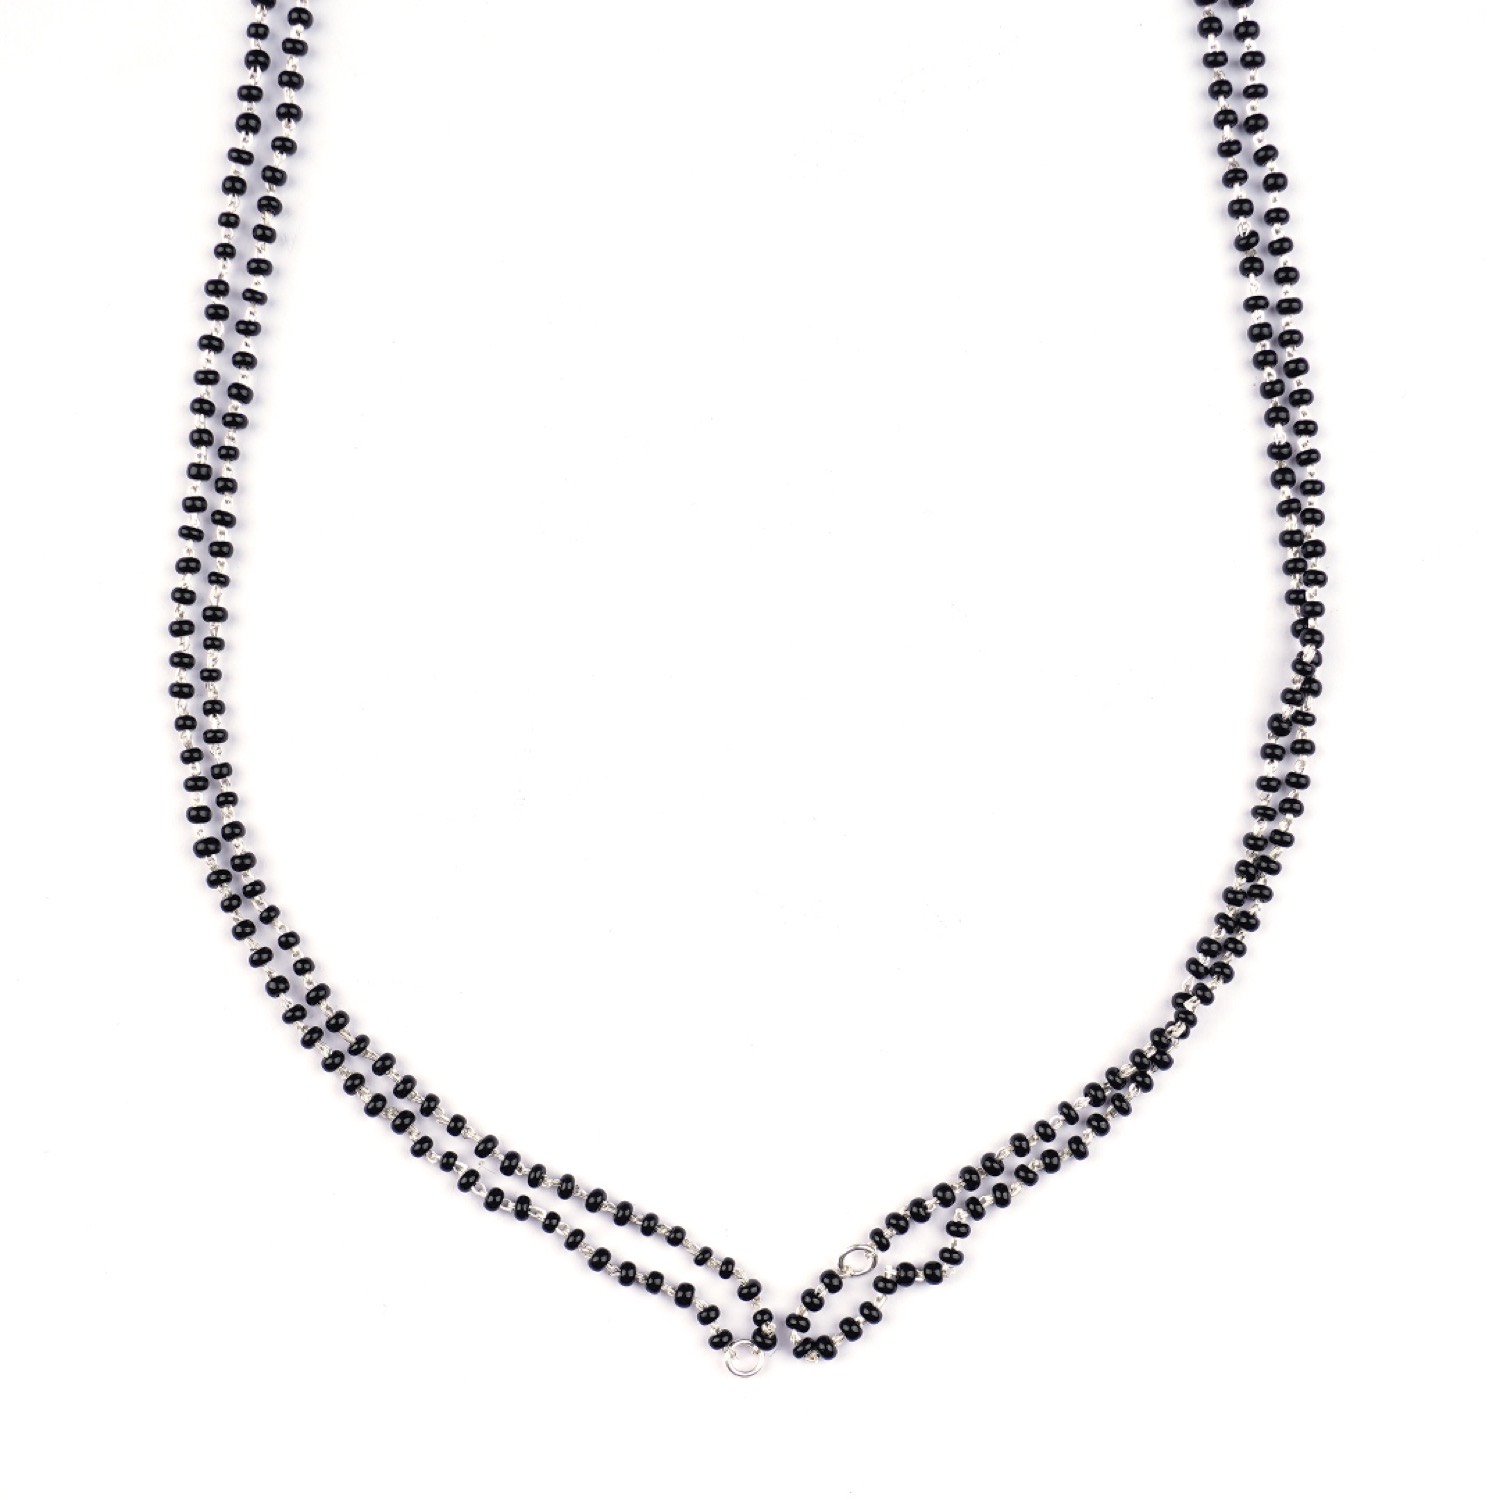 varam_chains_072022_black_beads_silver_chain_1-1